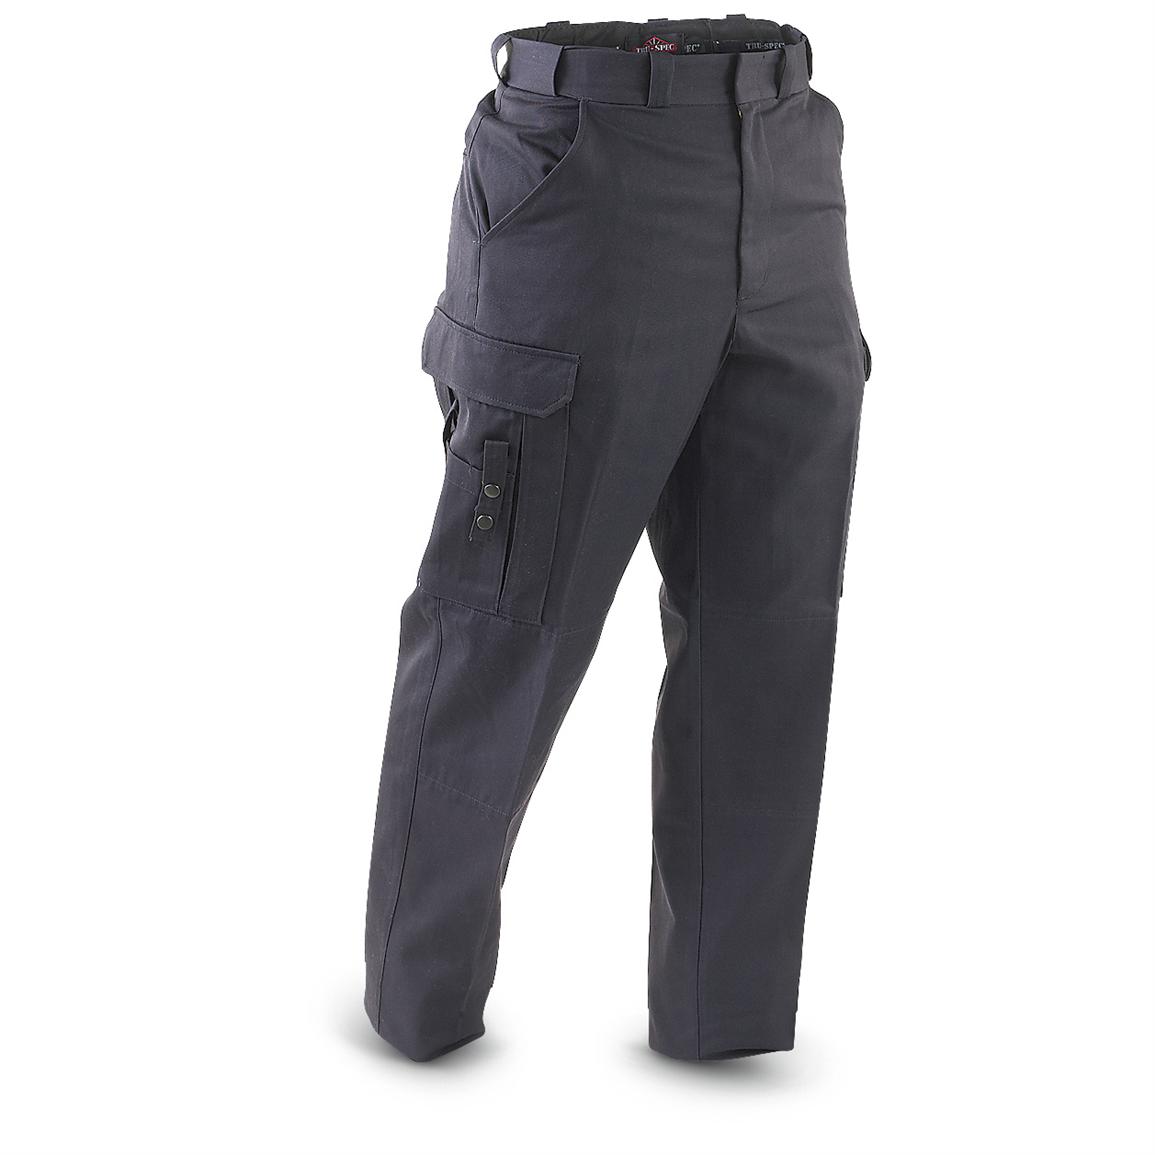 TRU - SPEC® EMS Pants, Midnight Navy - 228965, Pants at Sportsman's Guide